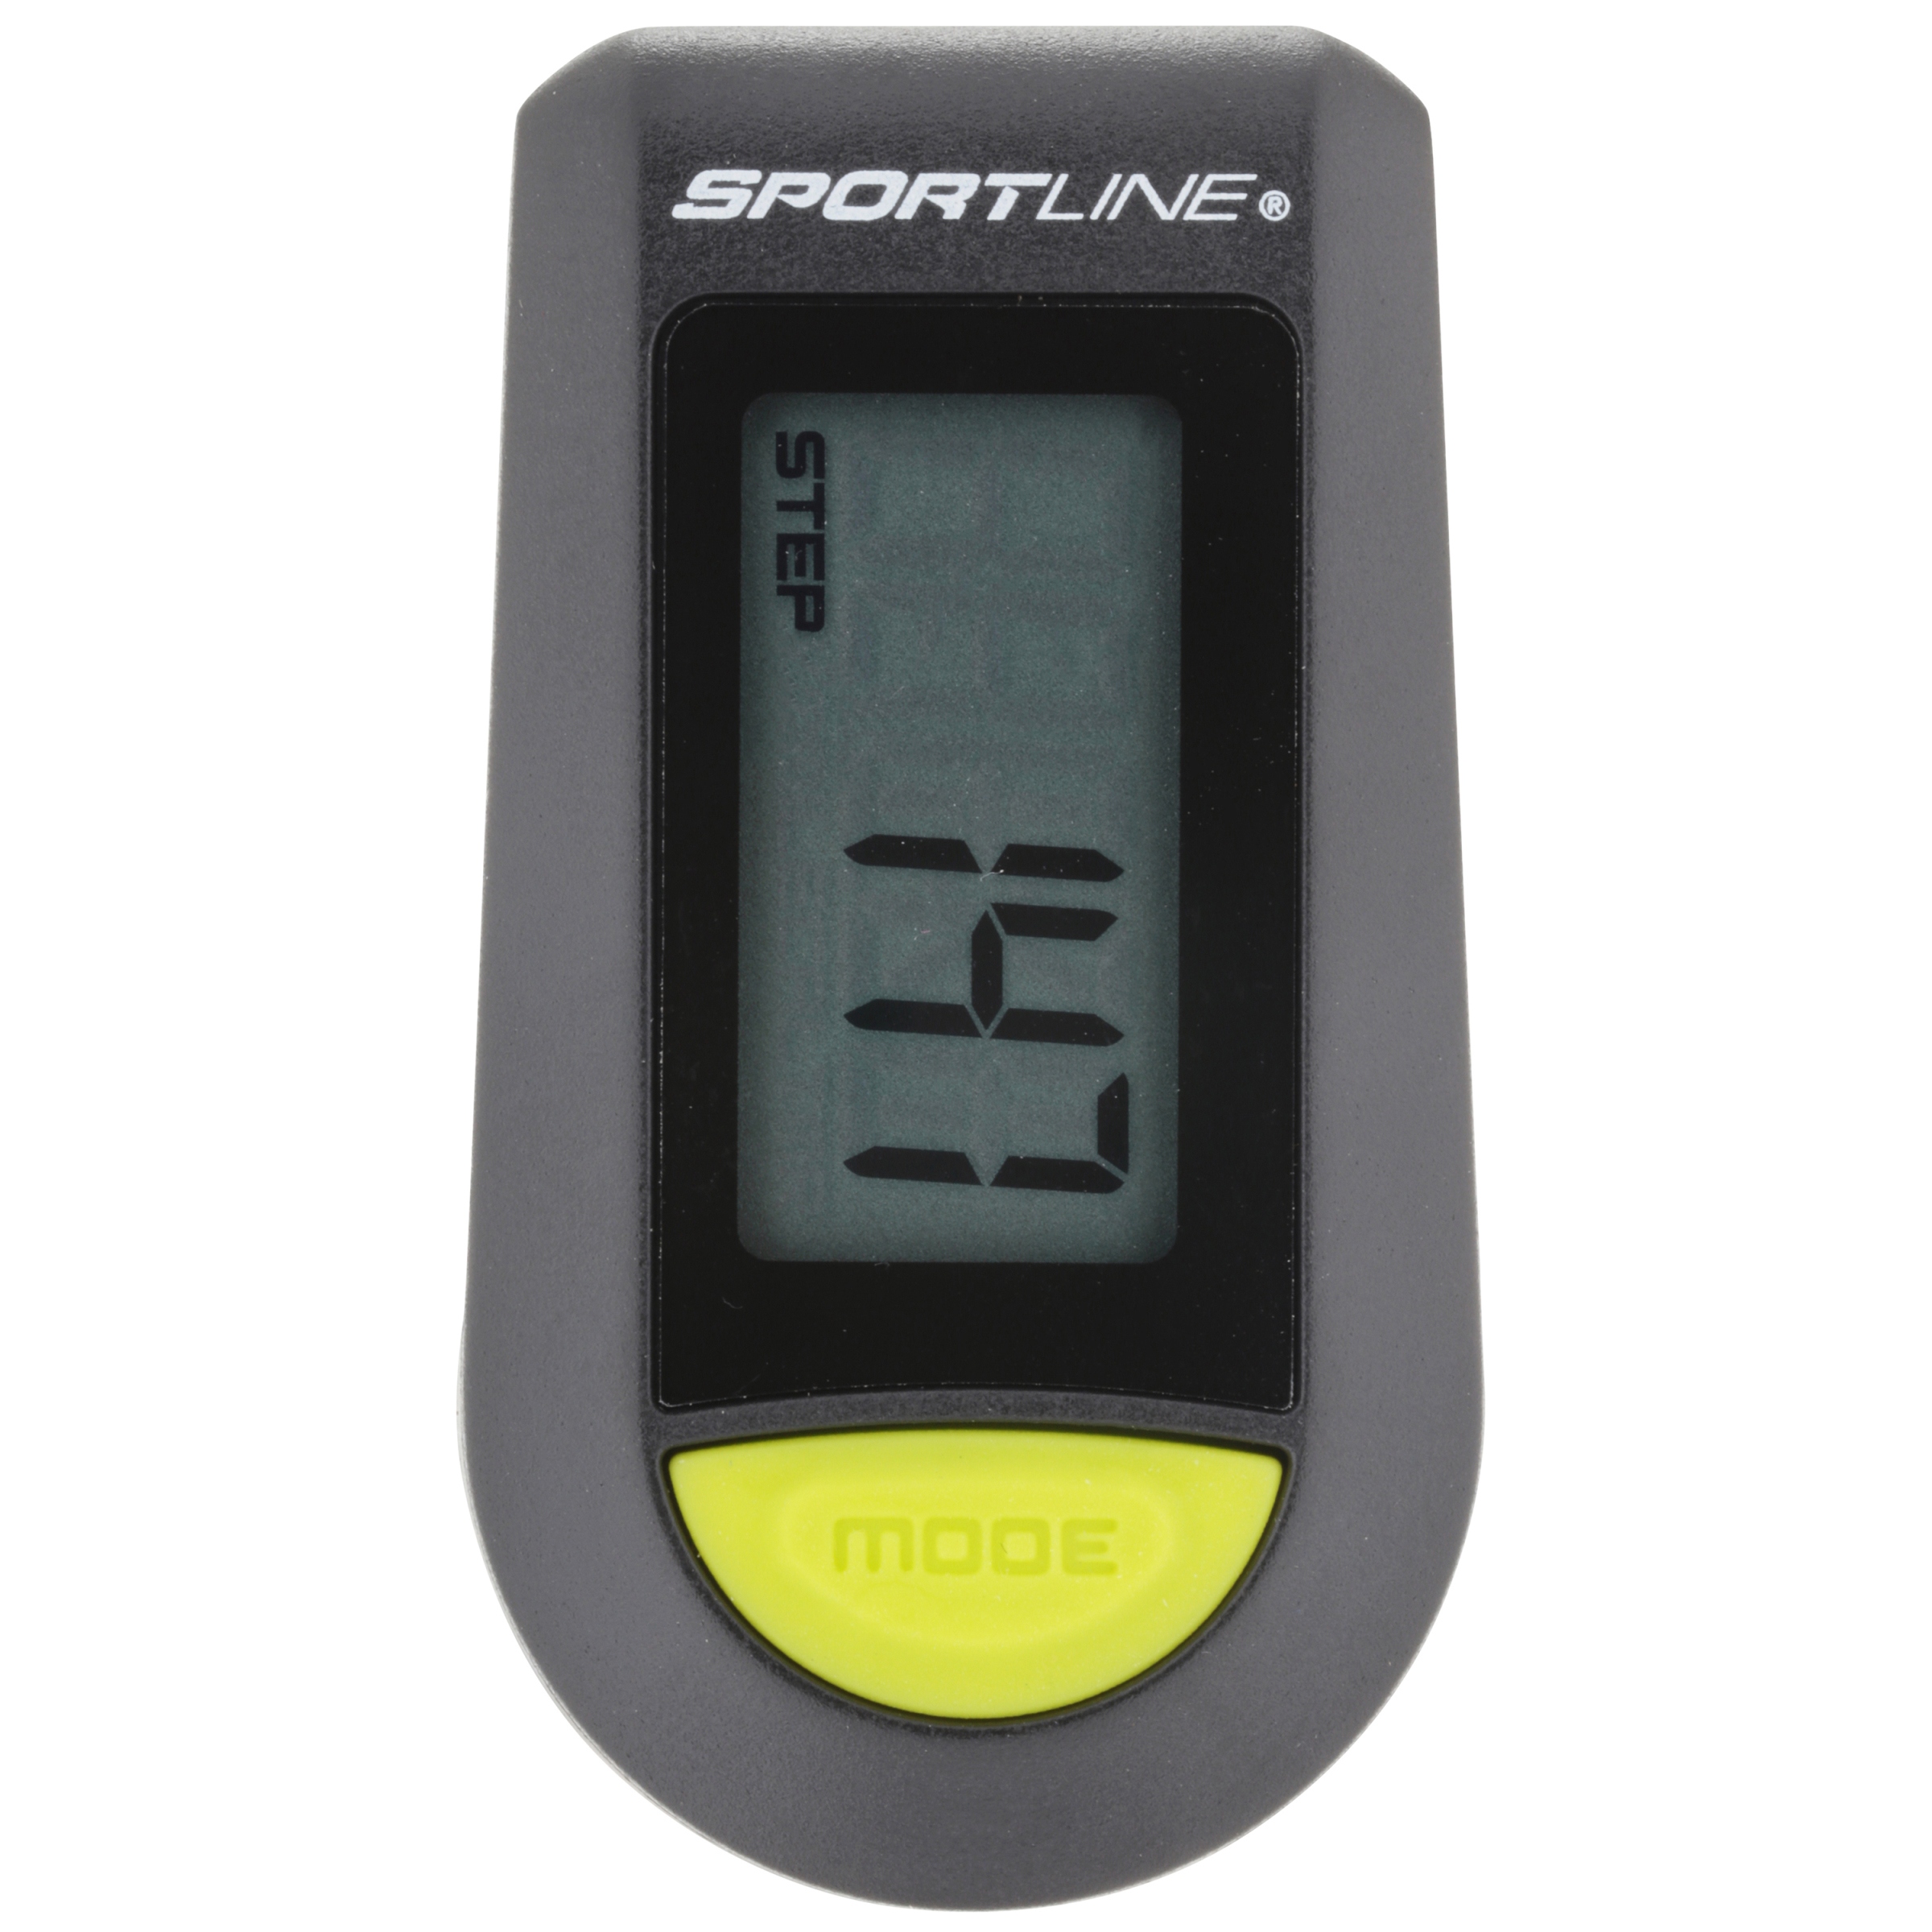 Sportline® Digital Distance Activity Tracker - image 1 of 4